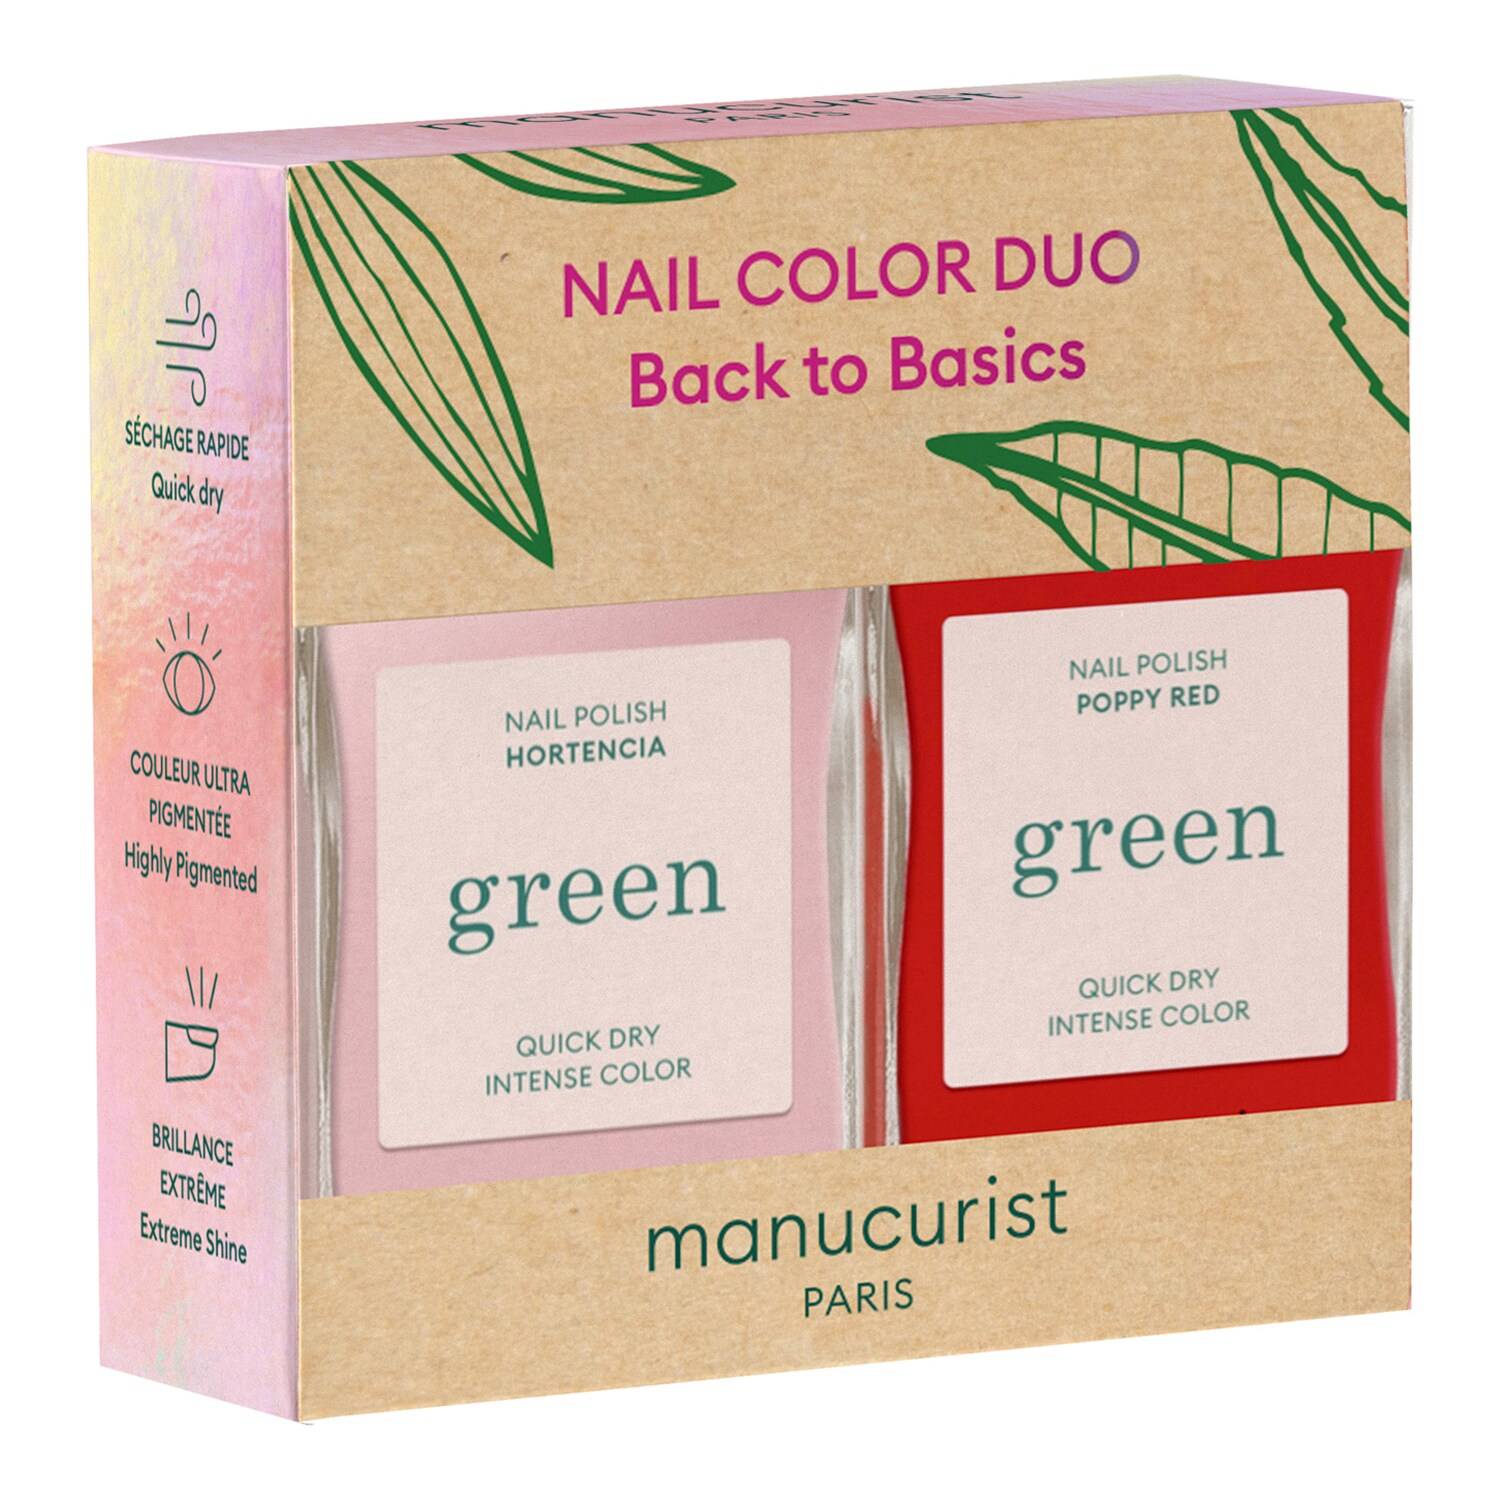 Manucurist Nail Color Duo Back To Basics Nail Polish Kit Hortencia + Poppy Red